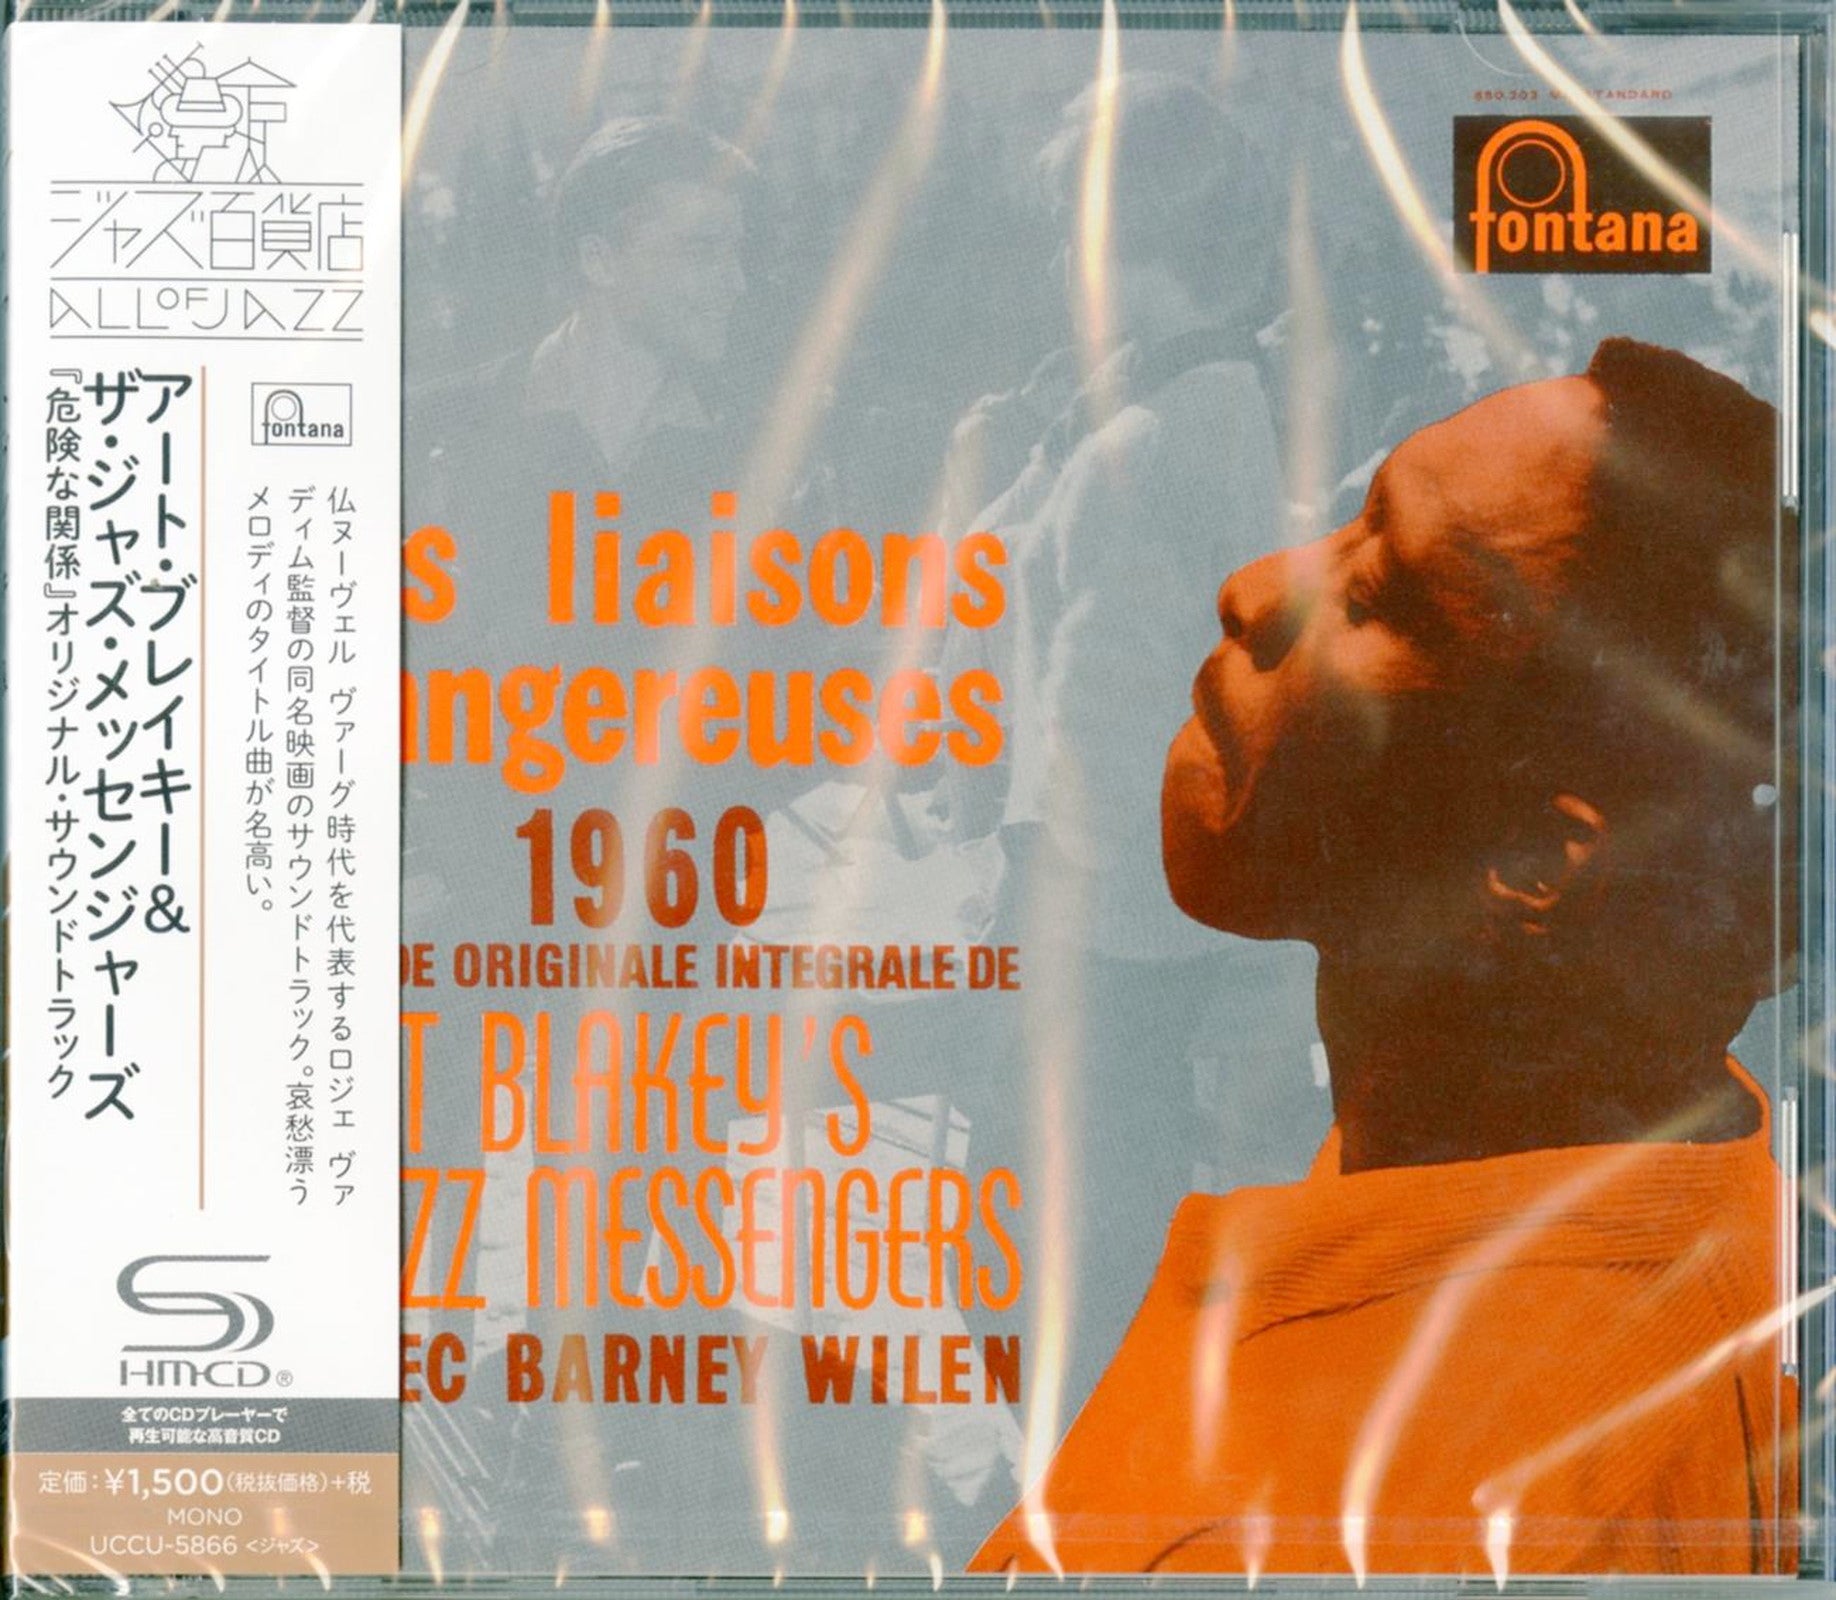 Art Blakey & The Jazz Messengers - Les Liaisons Dangereuses 1960